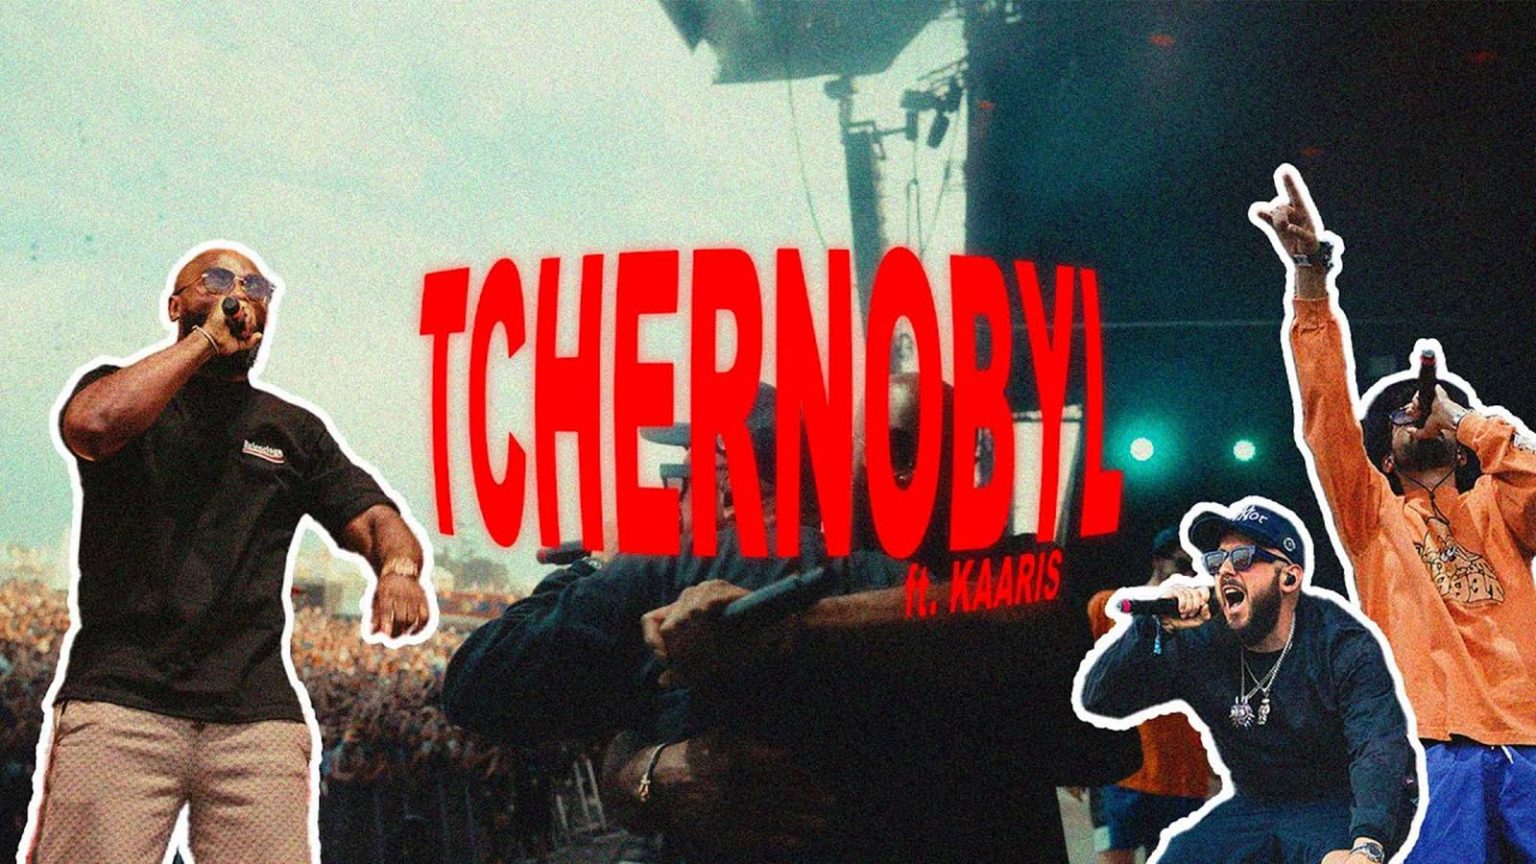 Photo de Caballero et JeanJass featuring Kaaris sur Tchernobyl, une collab' inattendue !